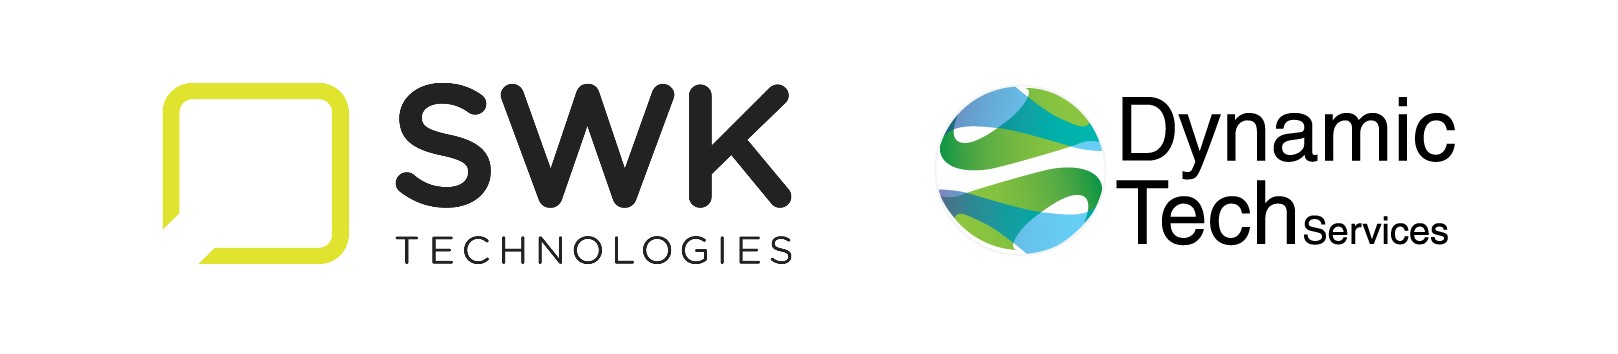 swk-technologies-dynamic-tech-services-acumatica-dtsi